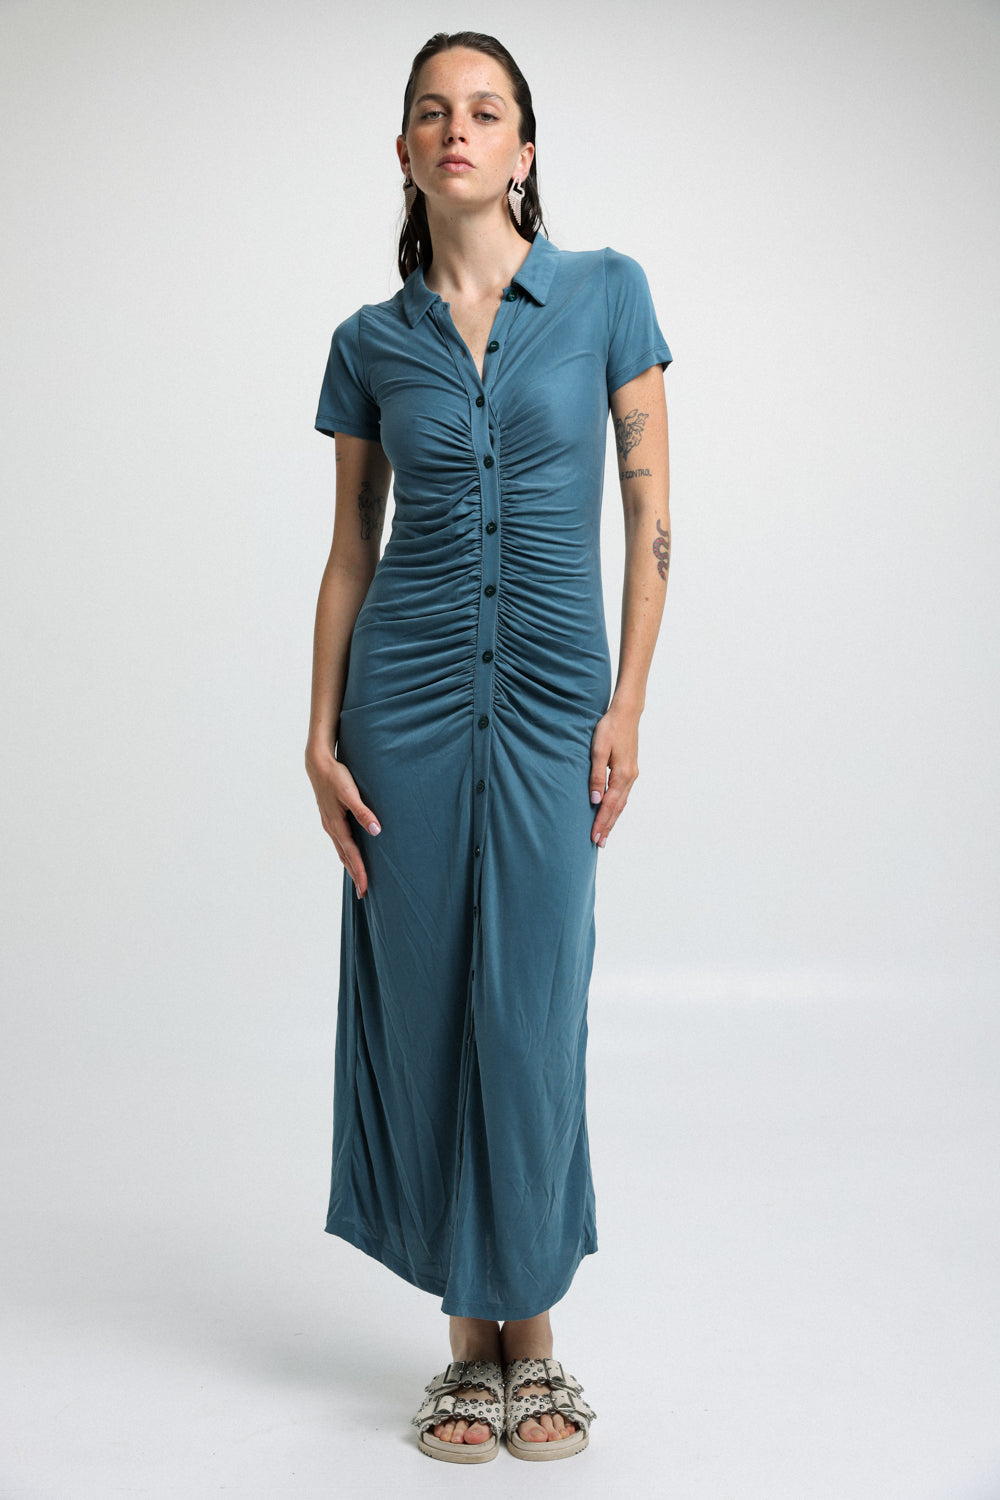 River Blue Dress